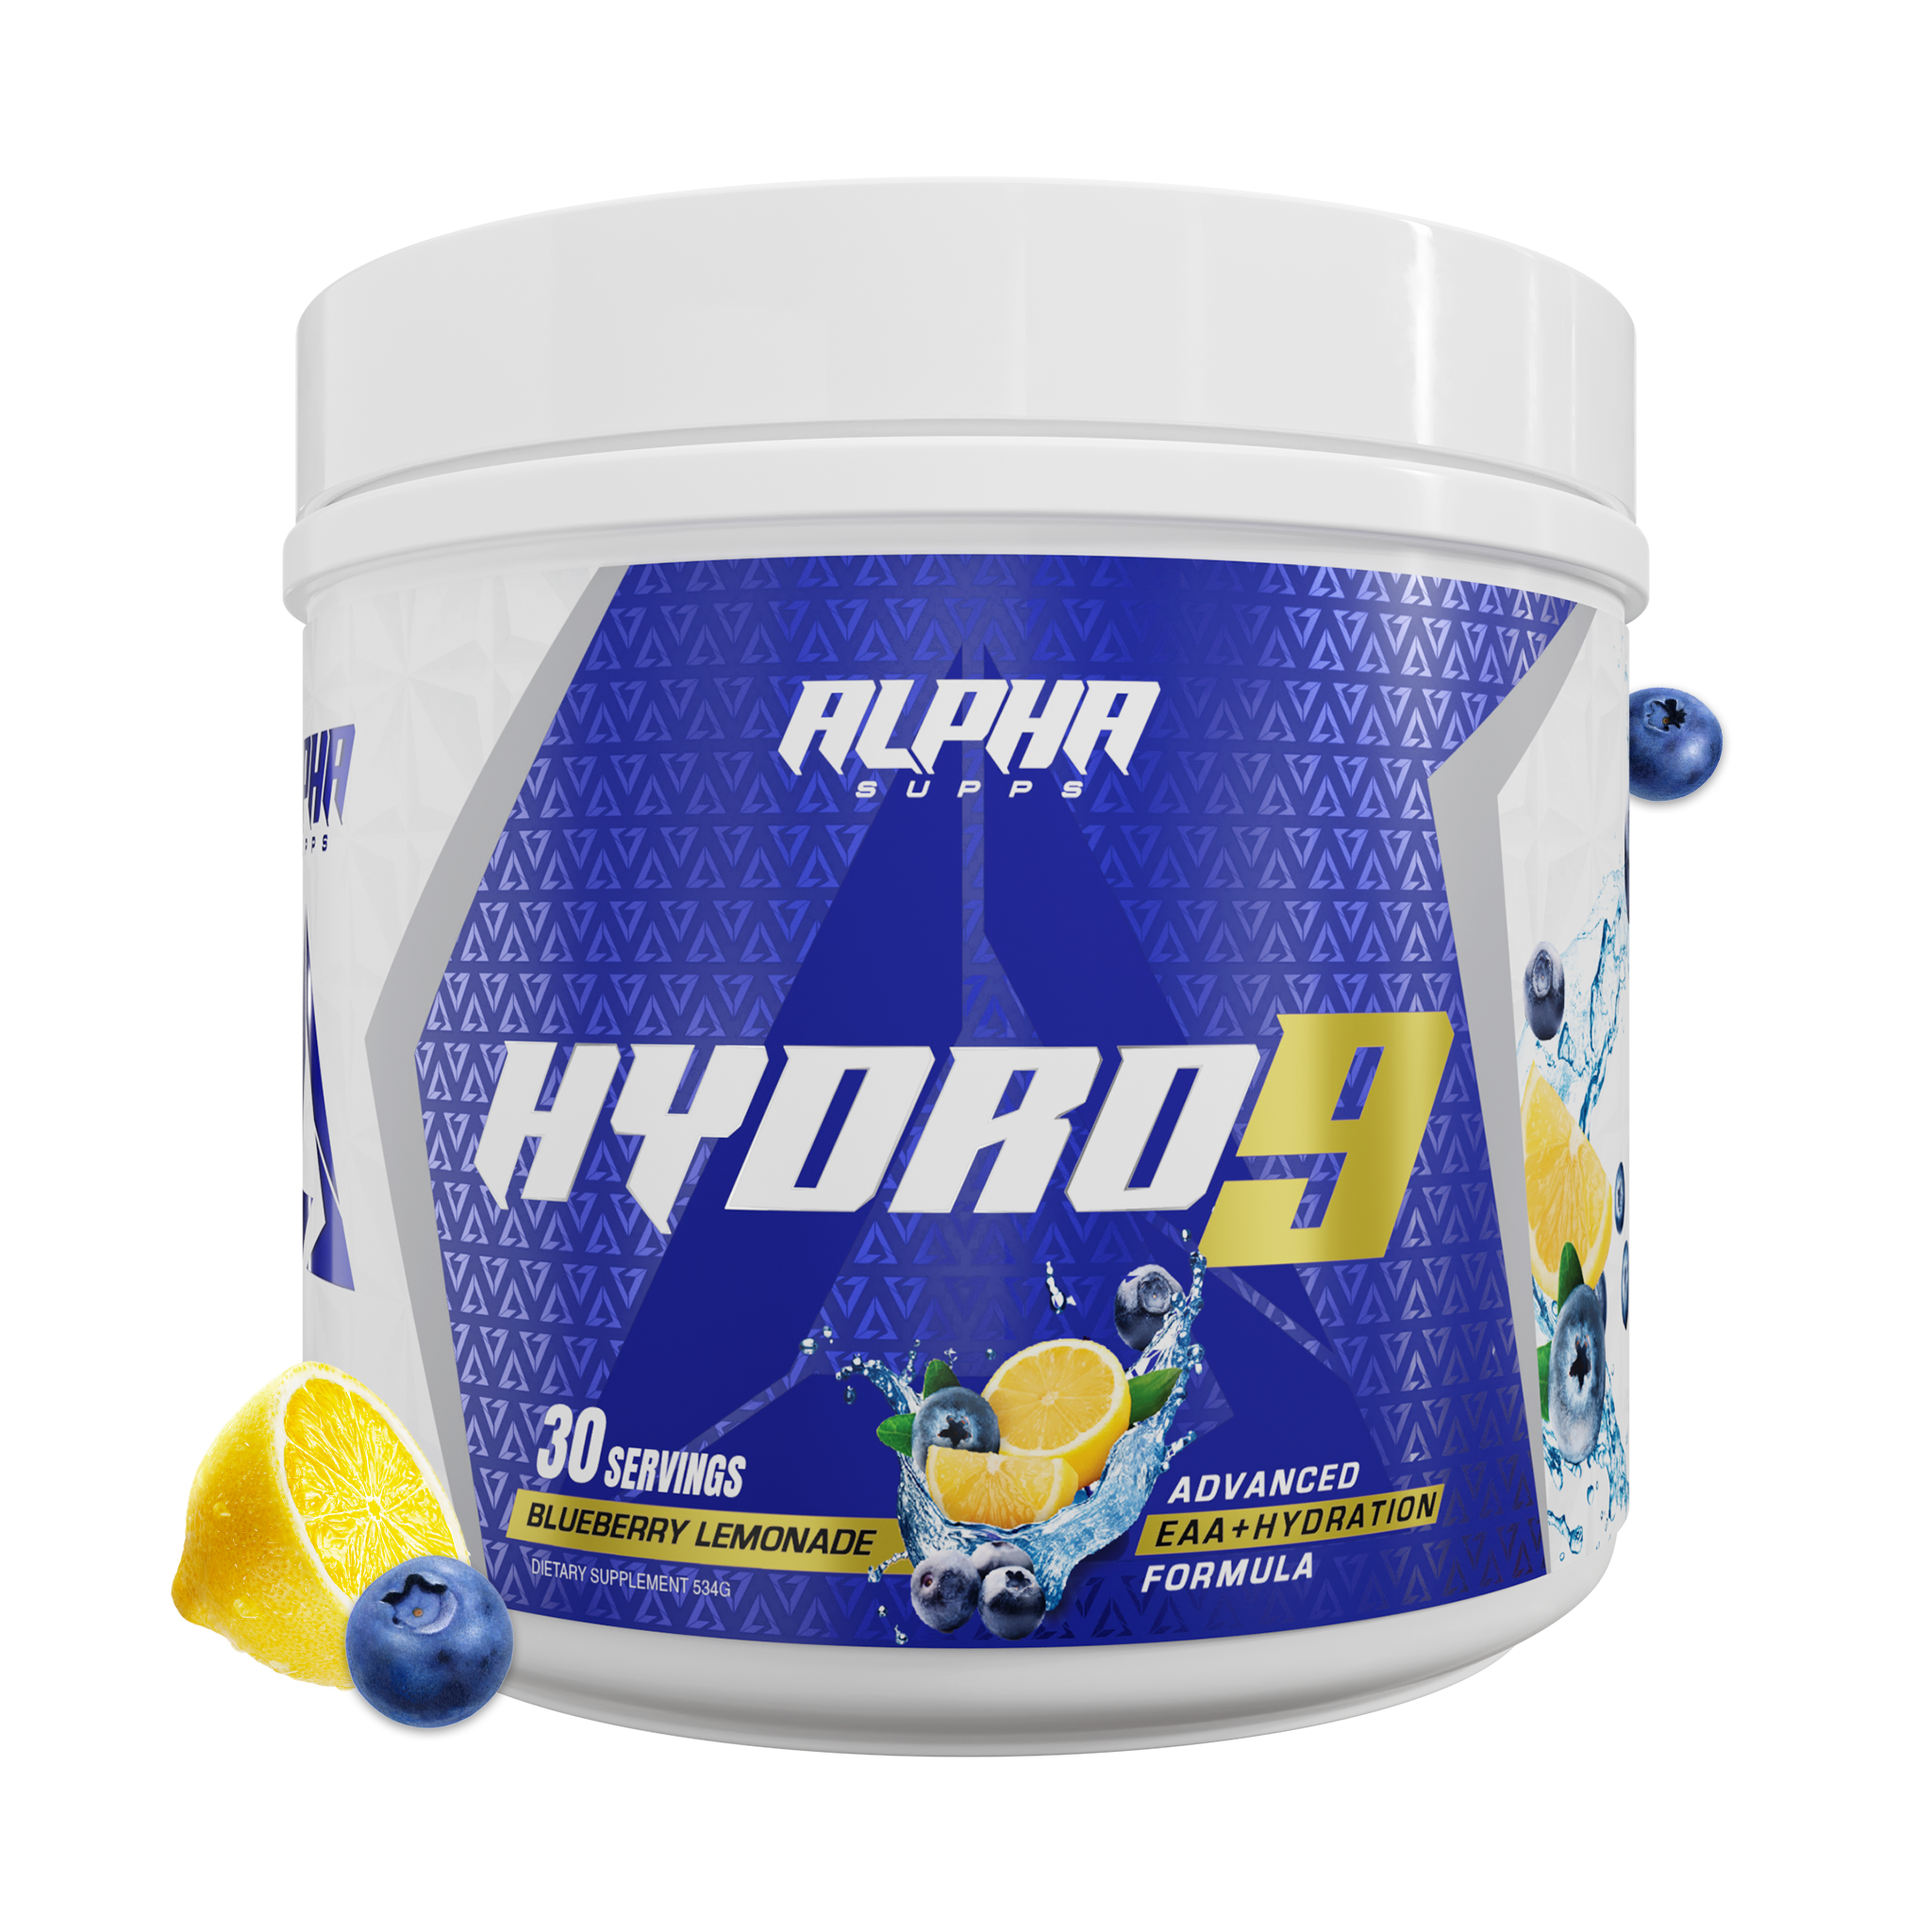 Hydro 9 - Alpha Supps®